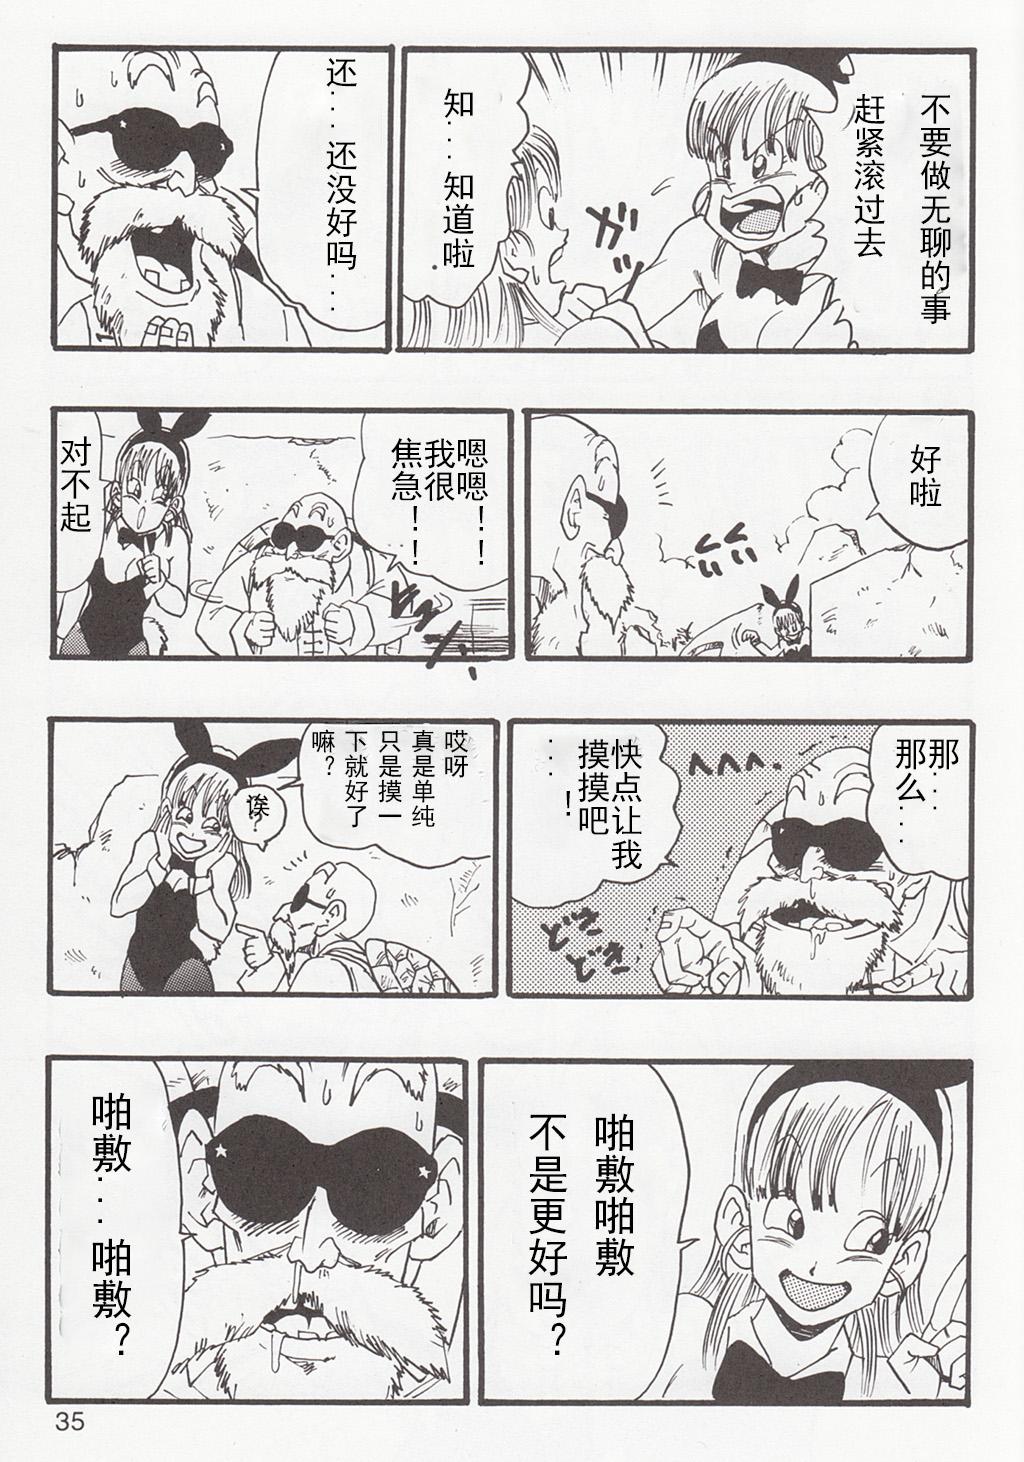 Orgame Dragon Ball EB 1 - Episode of Bulma - Dragon ball Whooty - Page 4